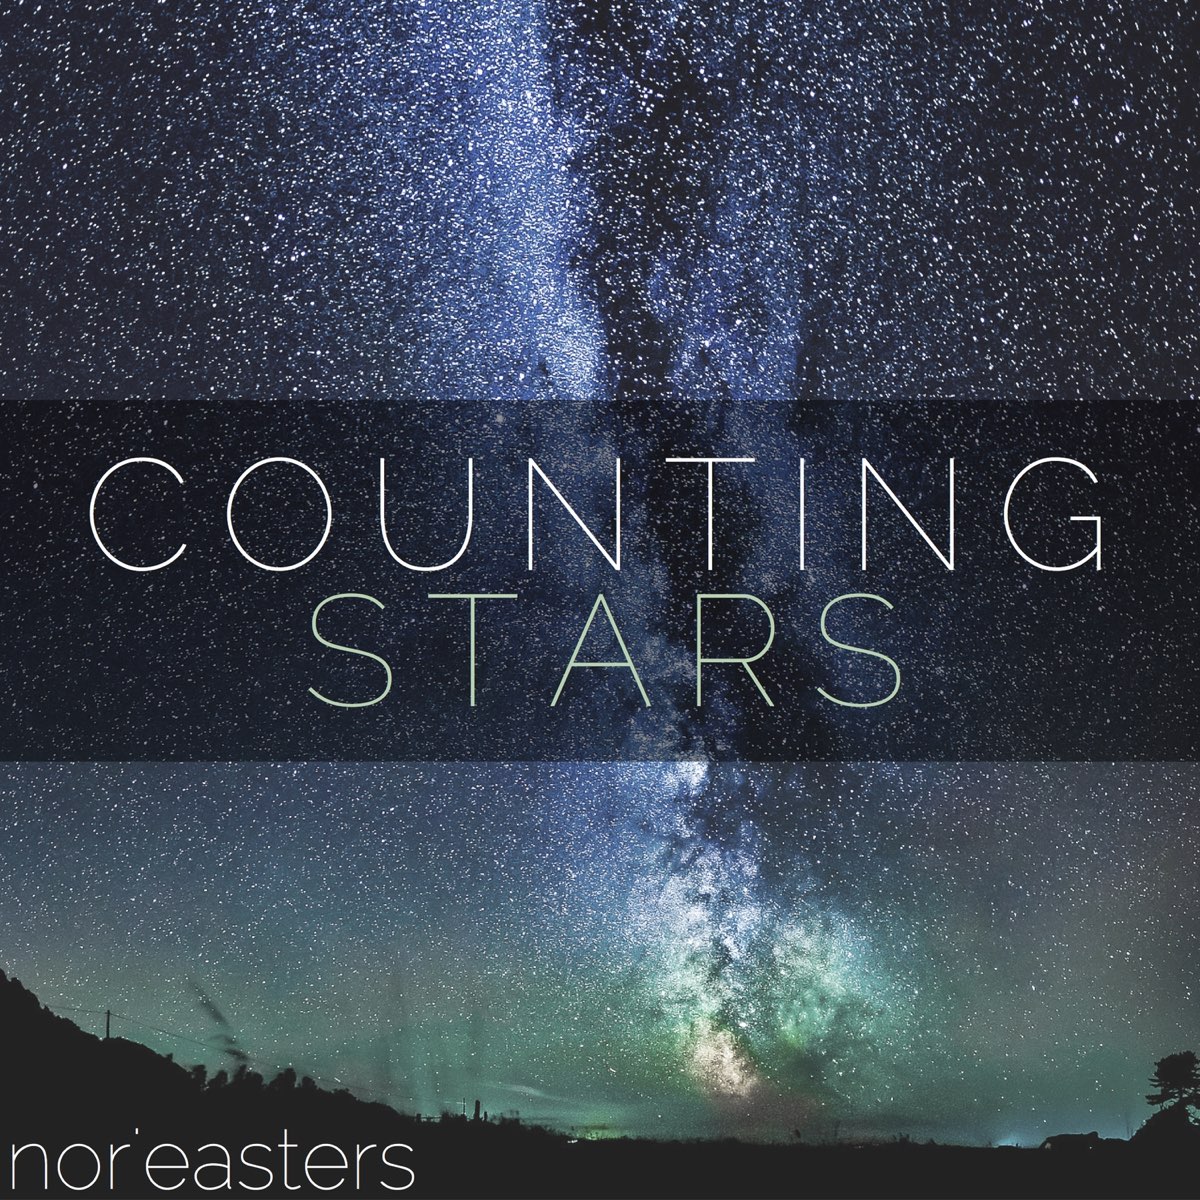 Stars album. One Republic counting Stars. ONEREPUBLIC - counting Stars альбом. ONEREPUBLIC counting Stars обложка. Count Stars.